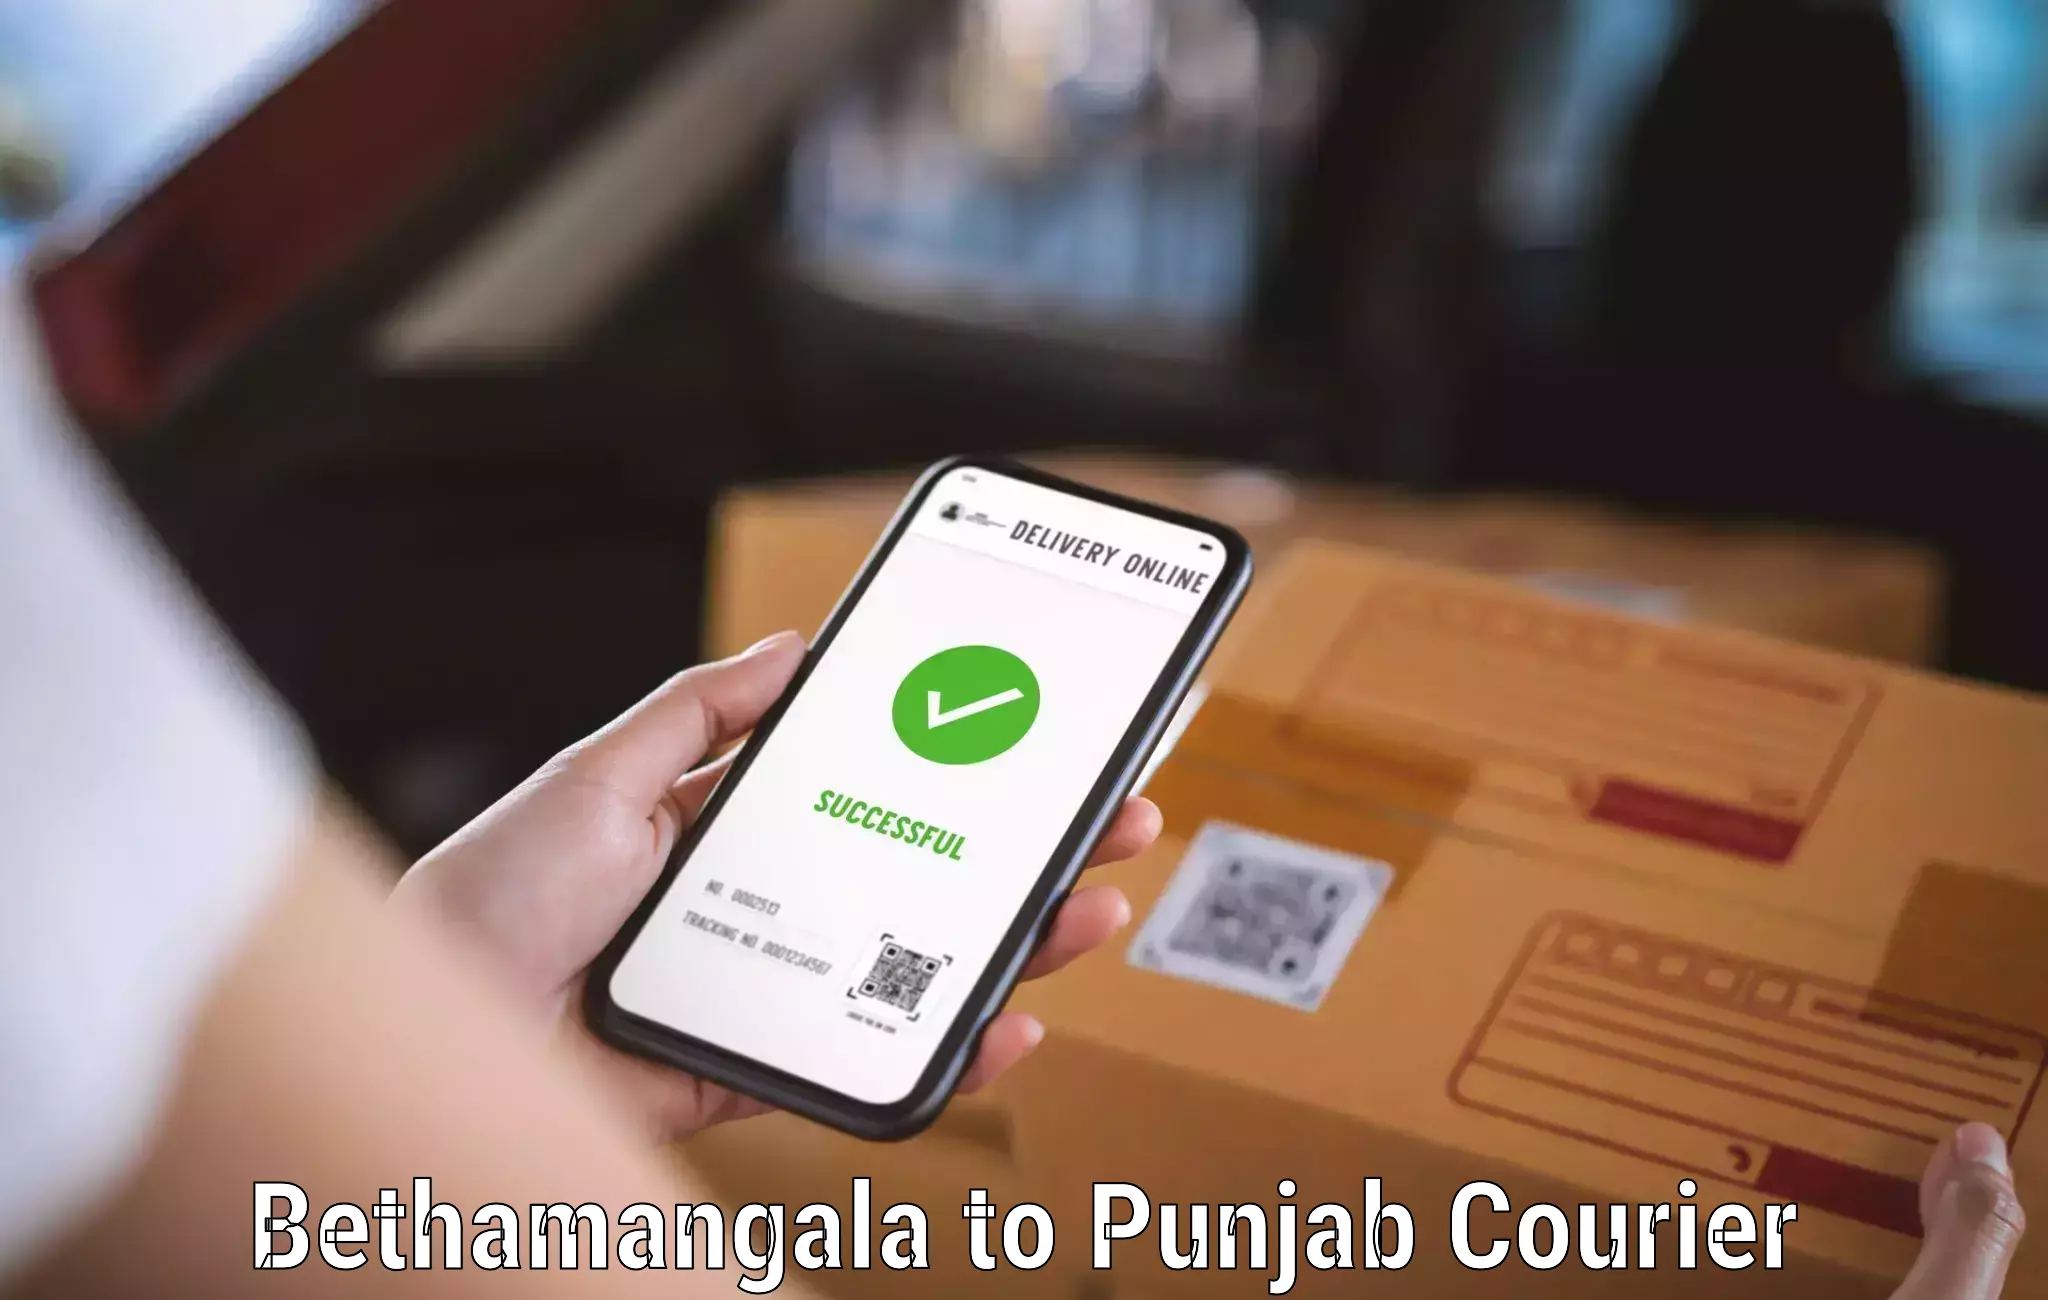 Courier service comparison Bethamangala to Punjab